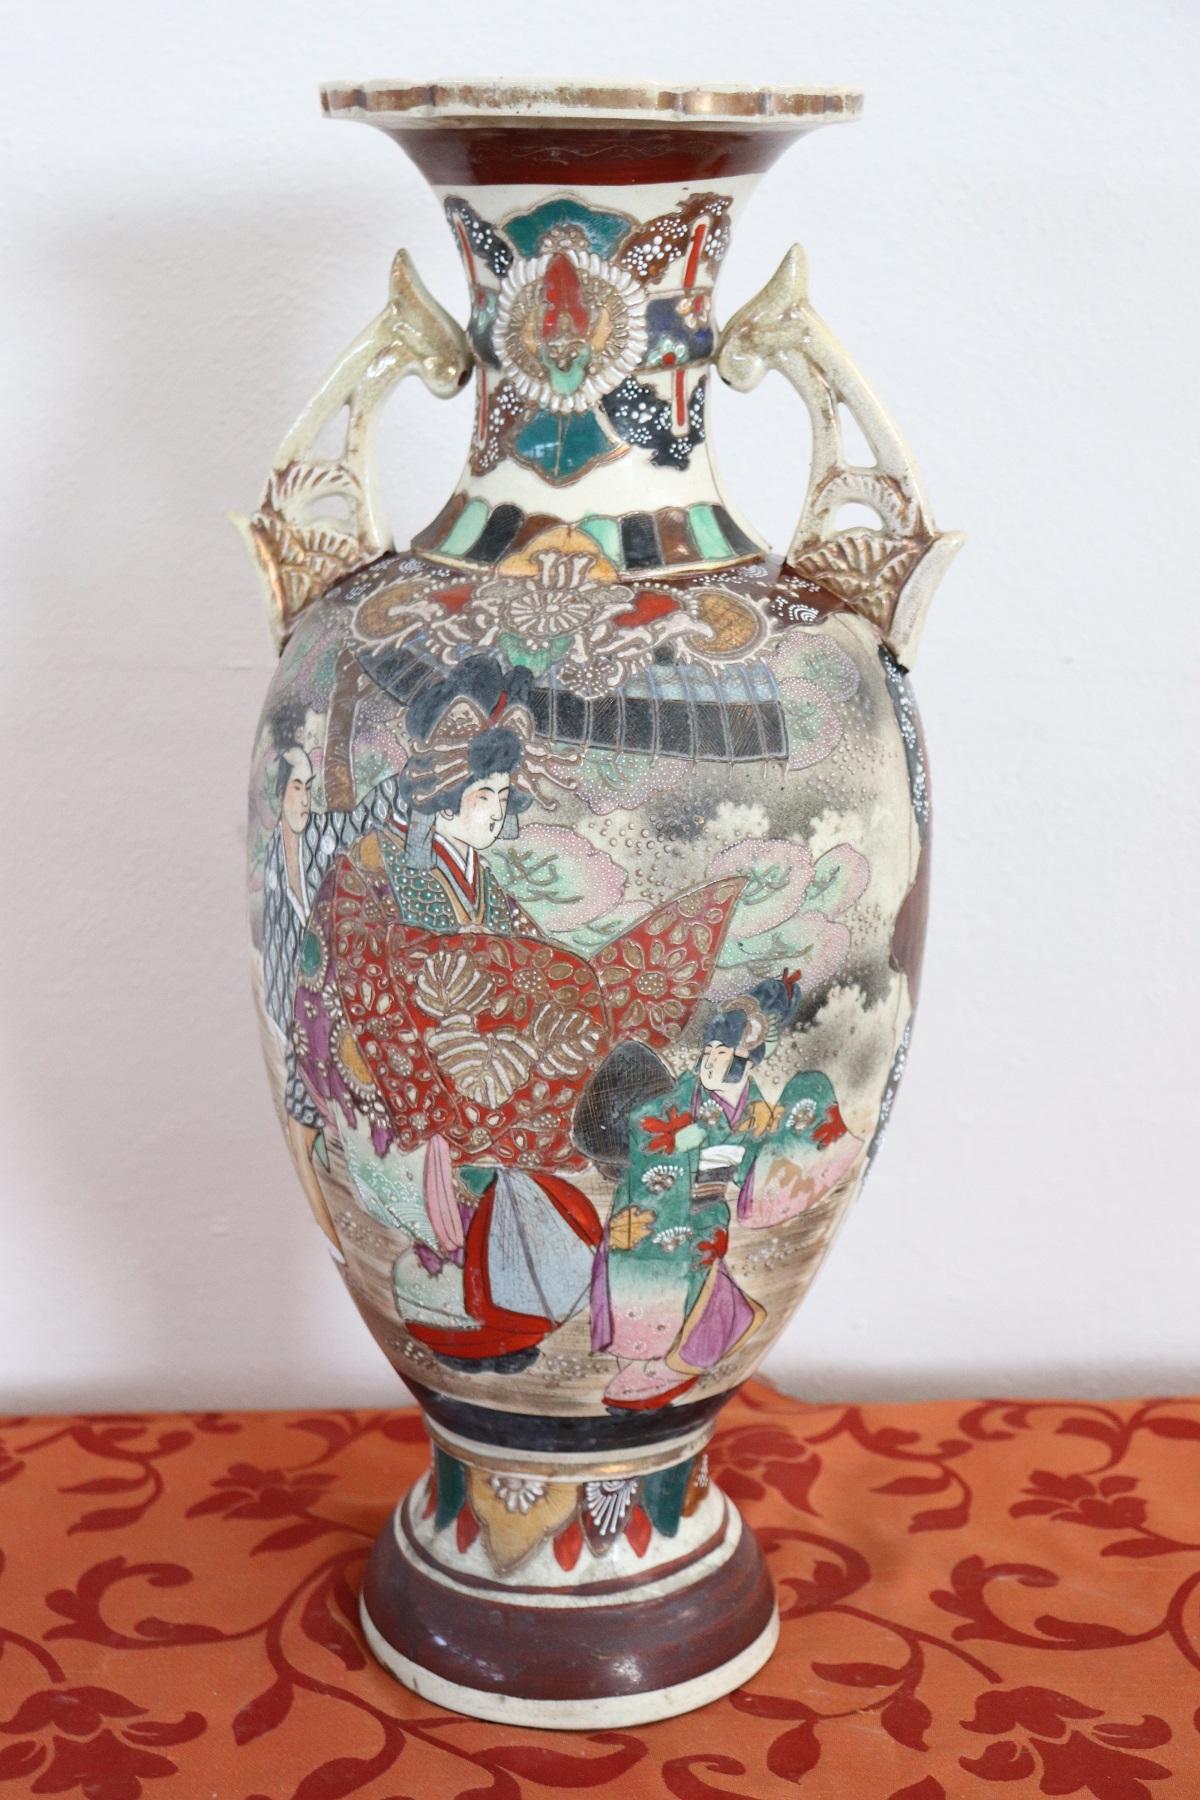 20th Century Japanese Vintage Artistic Satsuma Vase in Decorated Ceramic For Sale 1